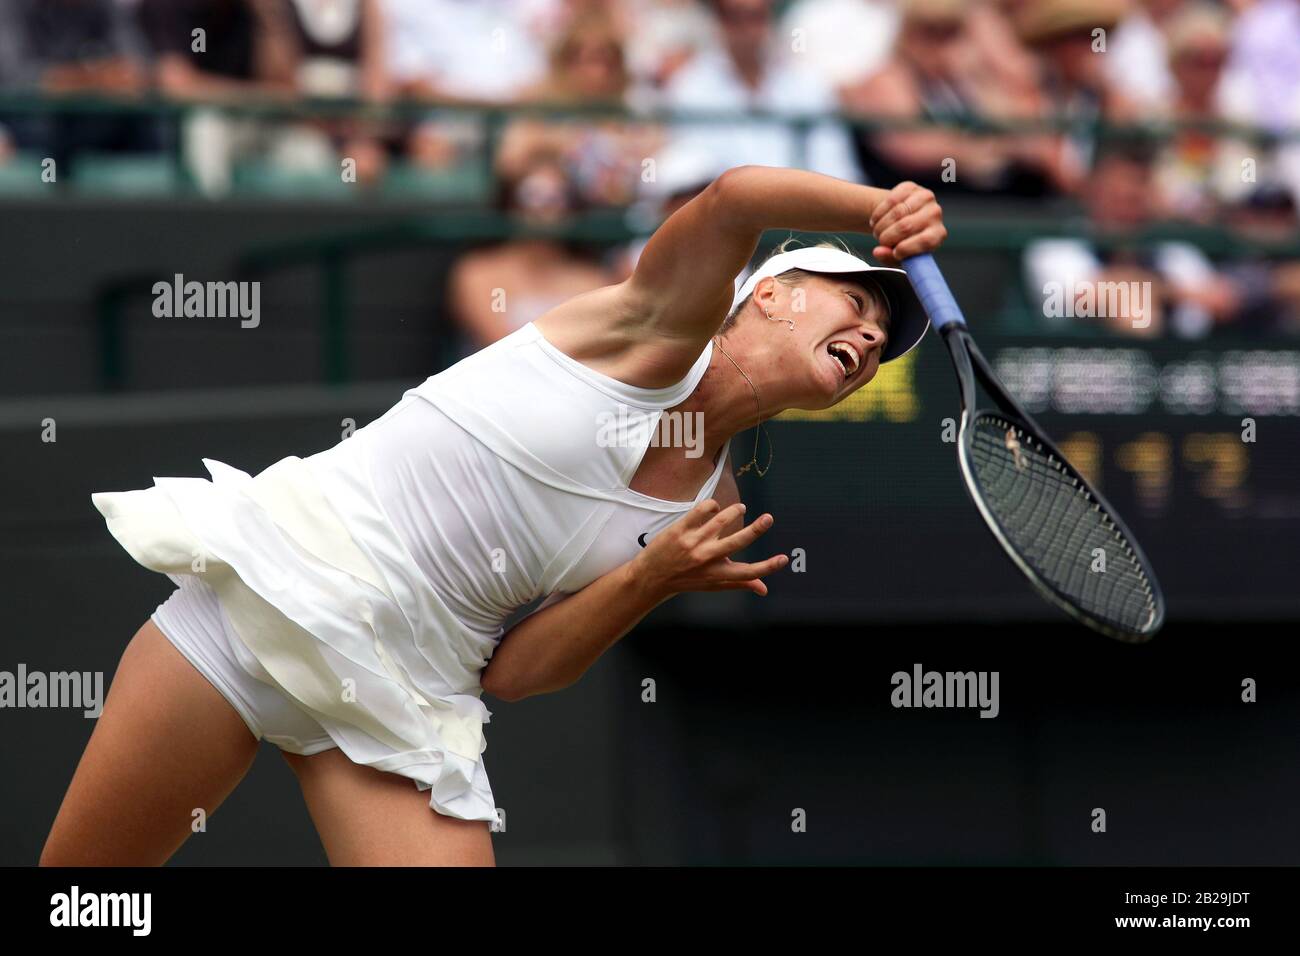 24 June, 2010: Wimbledon, UK: Maria Sharapova in action during her second round match against Joana Raluca Olaru of Romania during the 2010 Wimbledon Championships Stock Photo